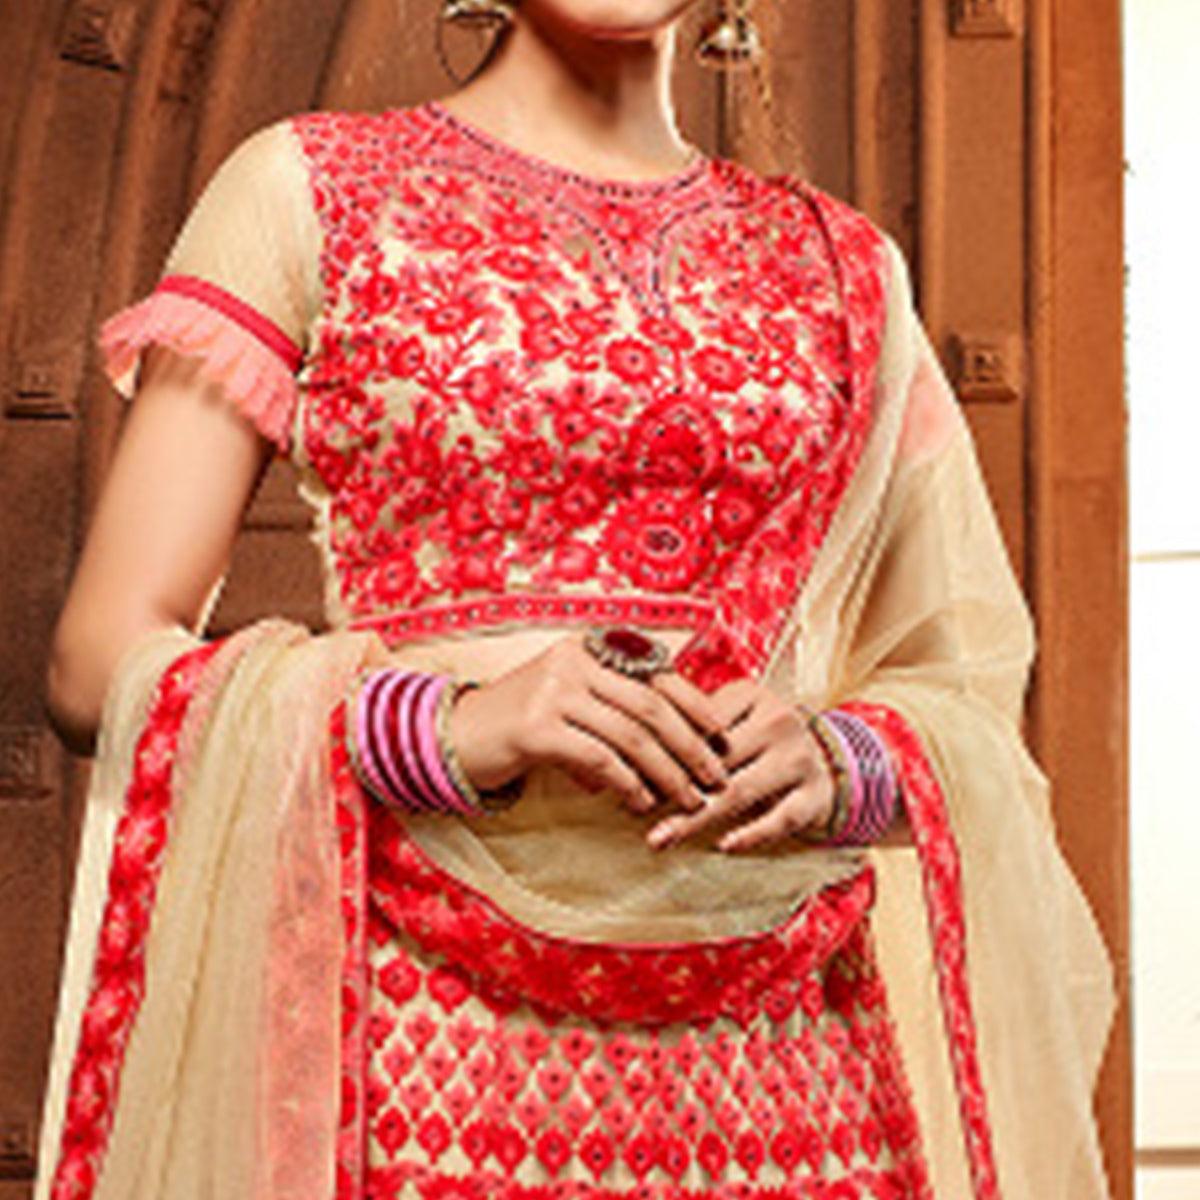 Impressive Red Colored Wedding Wear Heavy Embroidered Heavy Net Lehenga - Peachmode